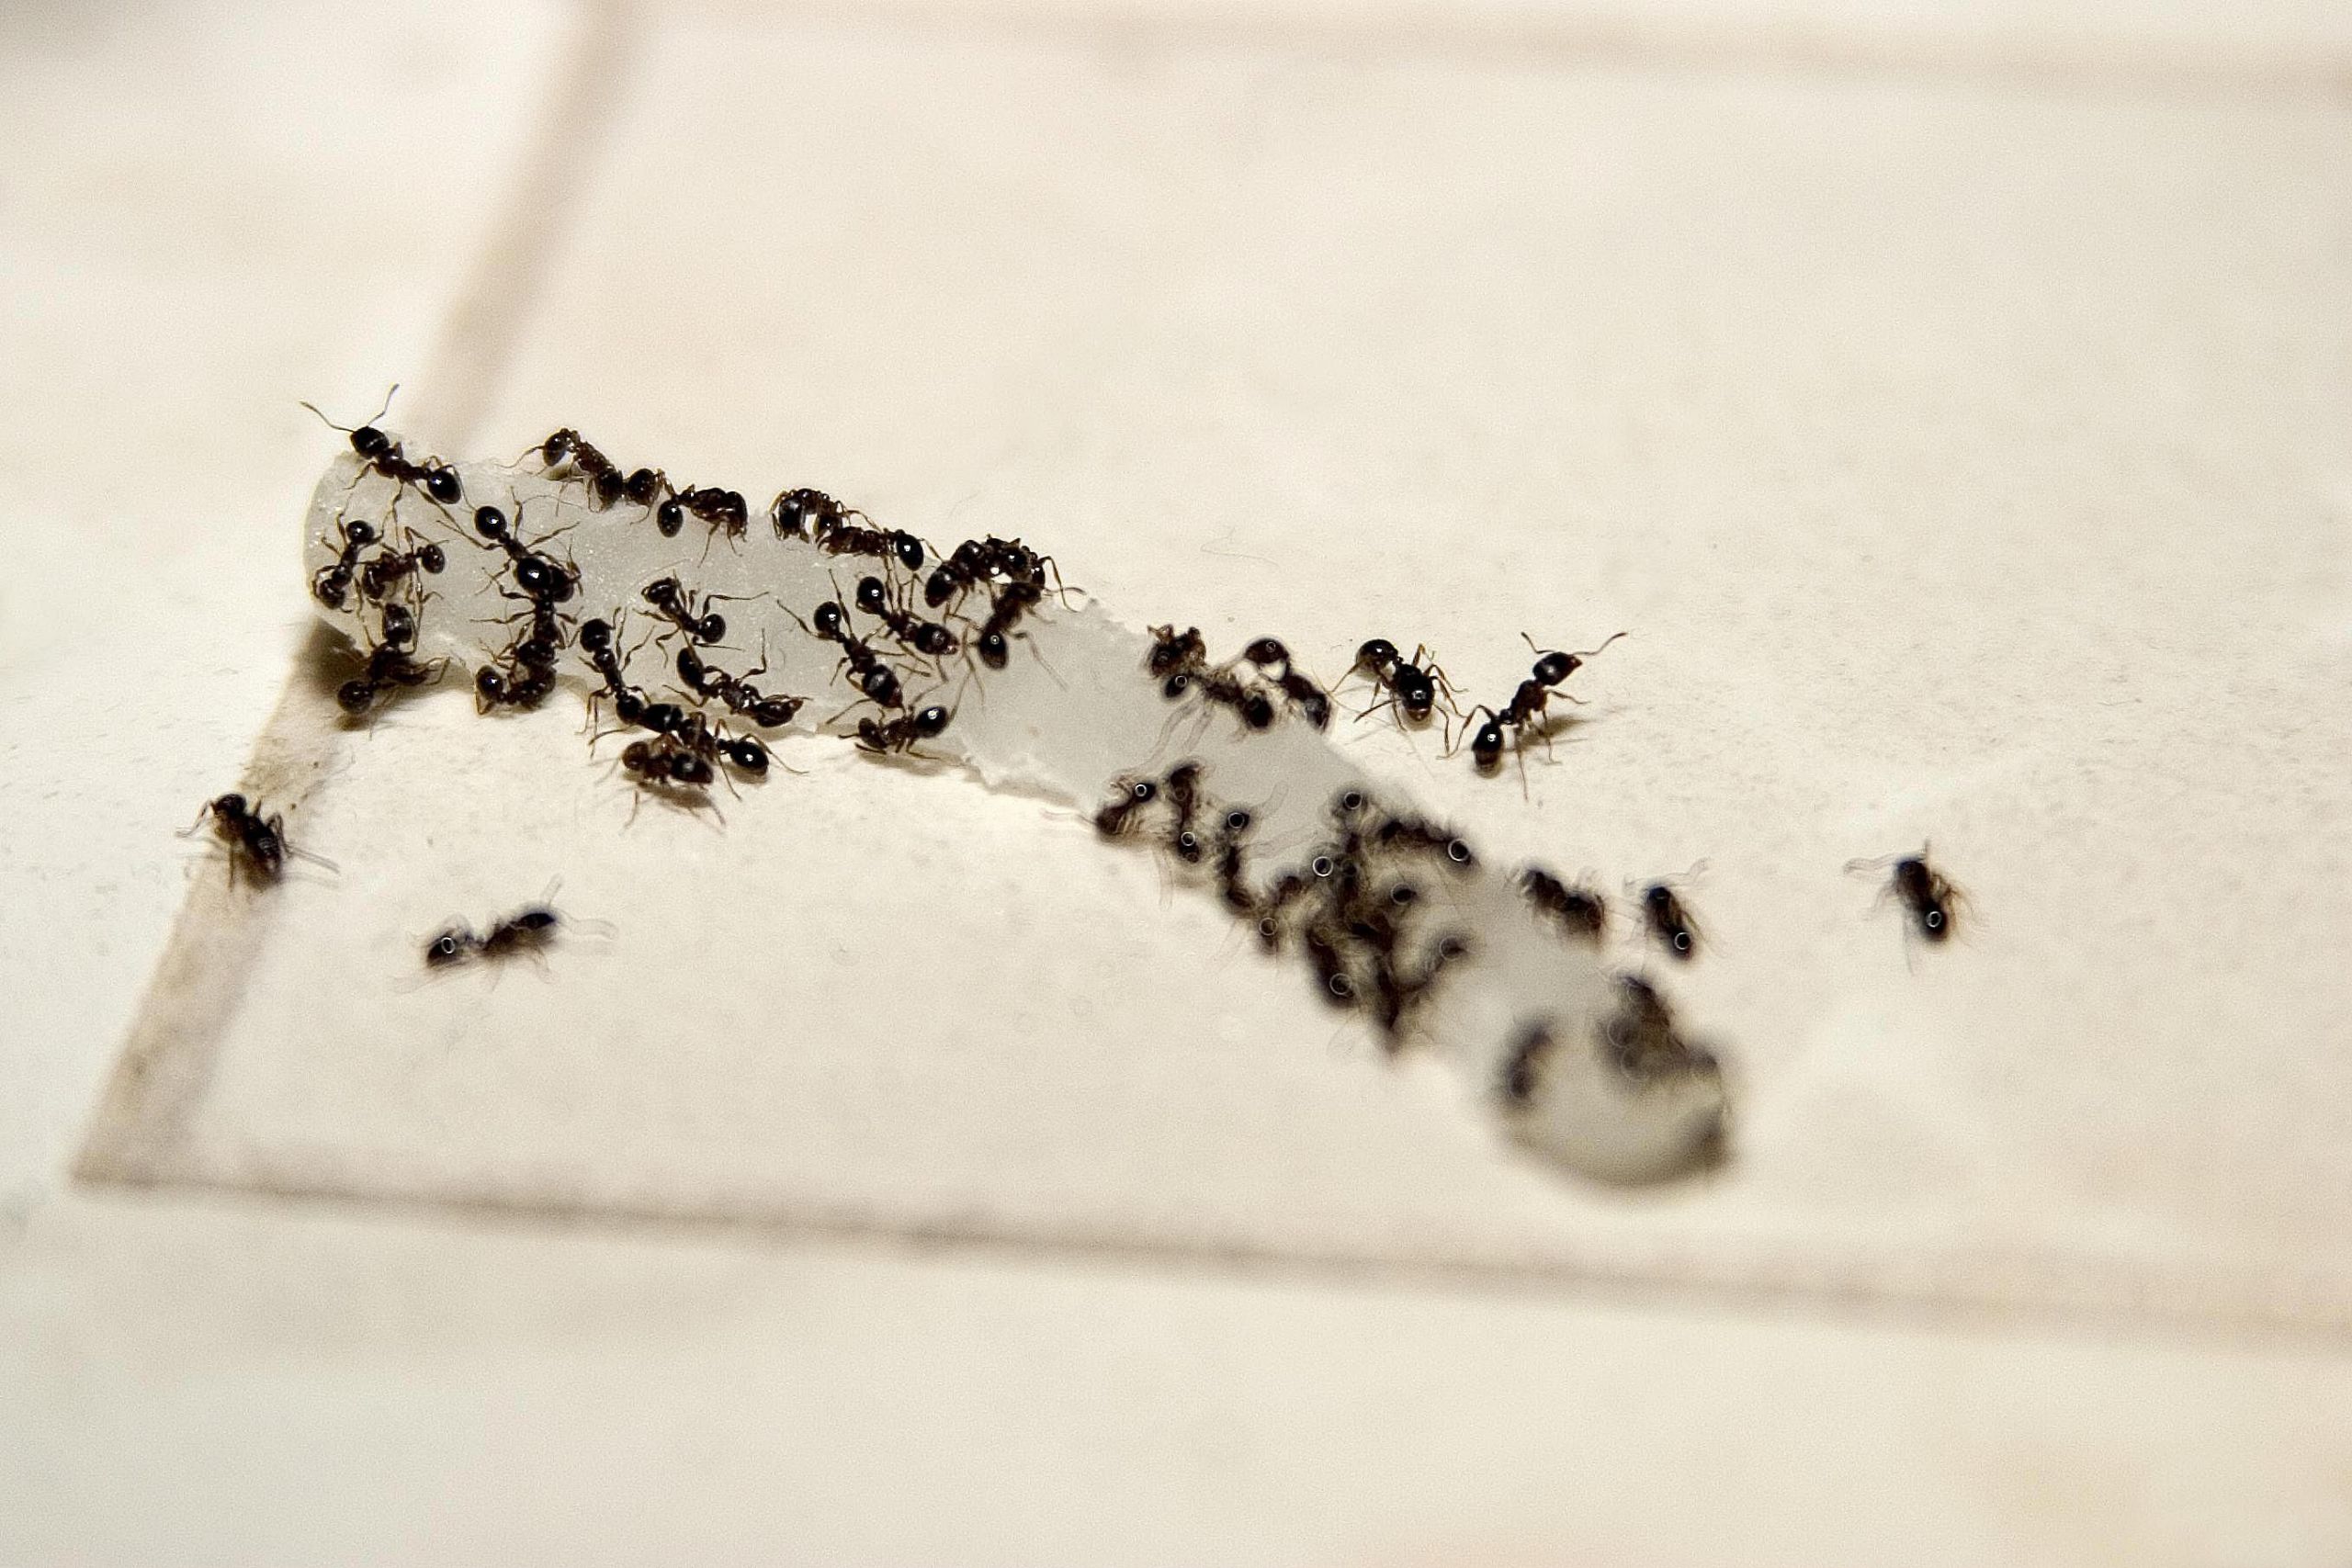 tiny ants in kitchen near sink